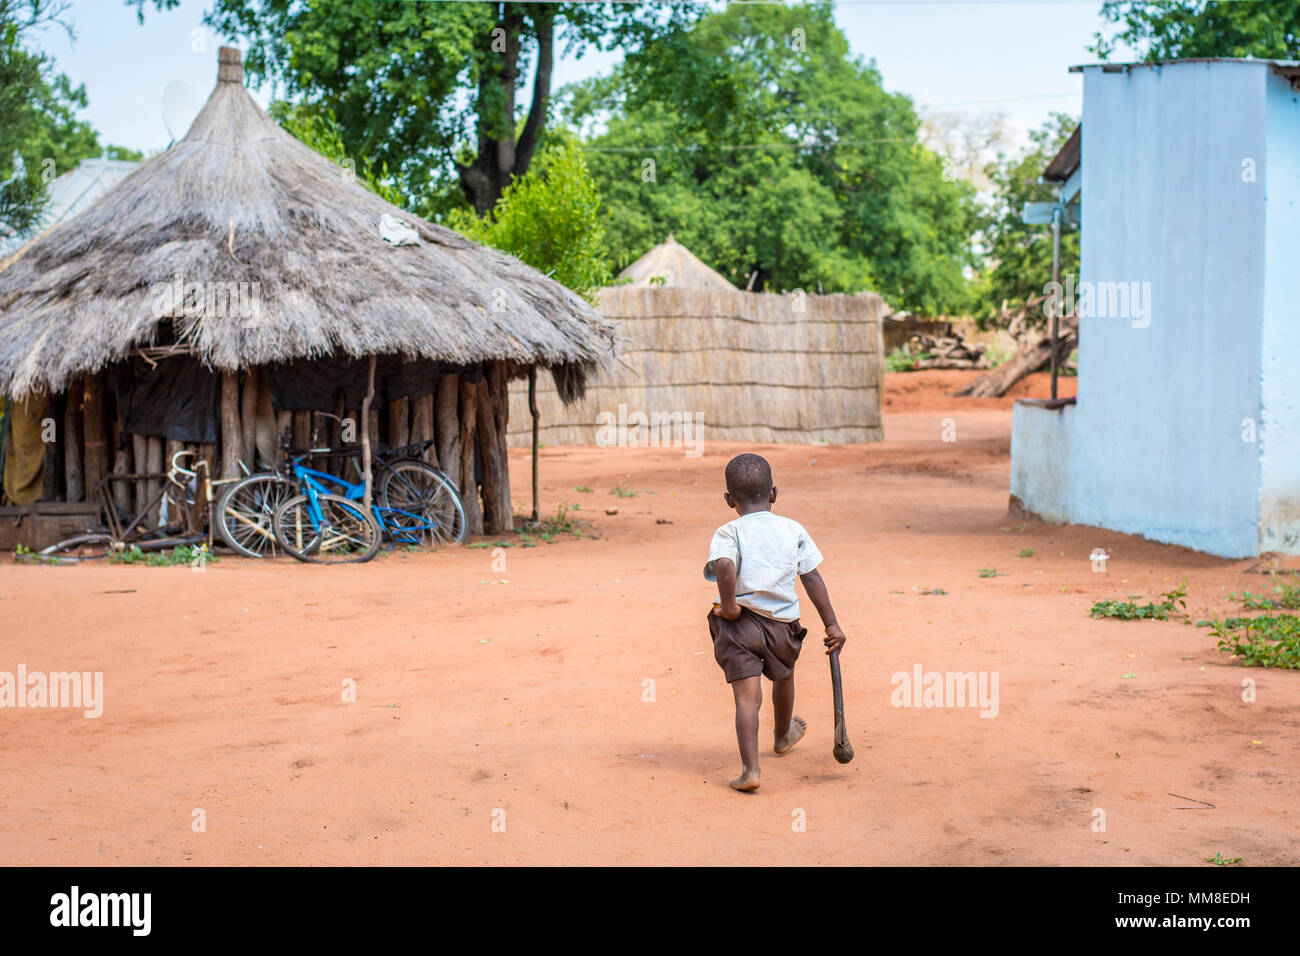 Young Zambian boy walks away through village while holding onto hatchet and his pants, Mukuni Village, Zambia Stock Photo